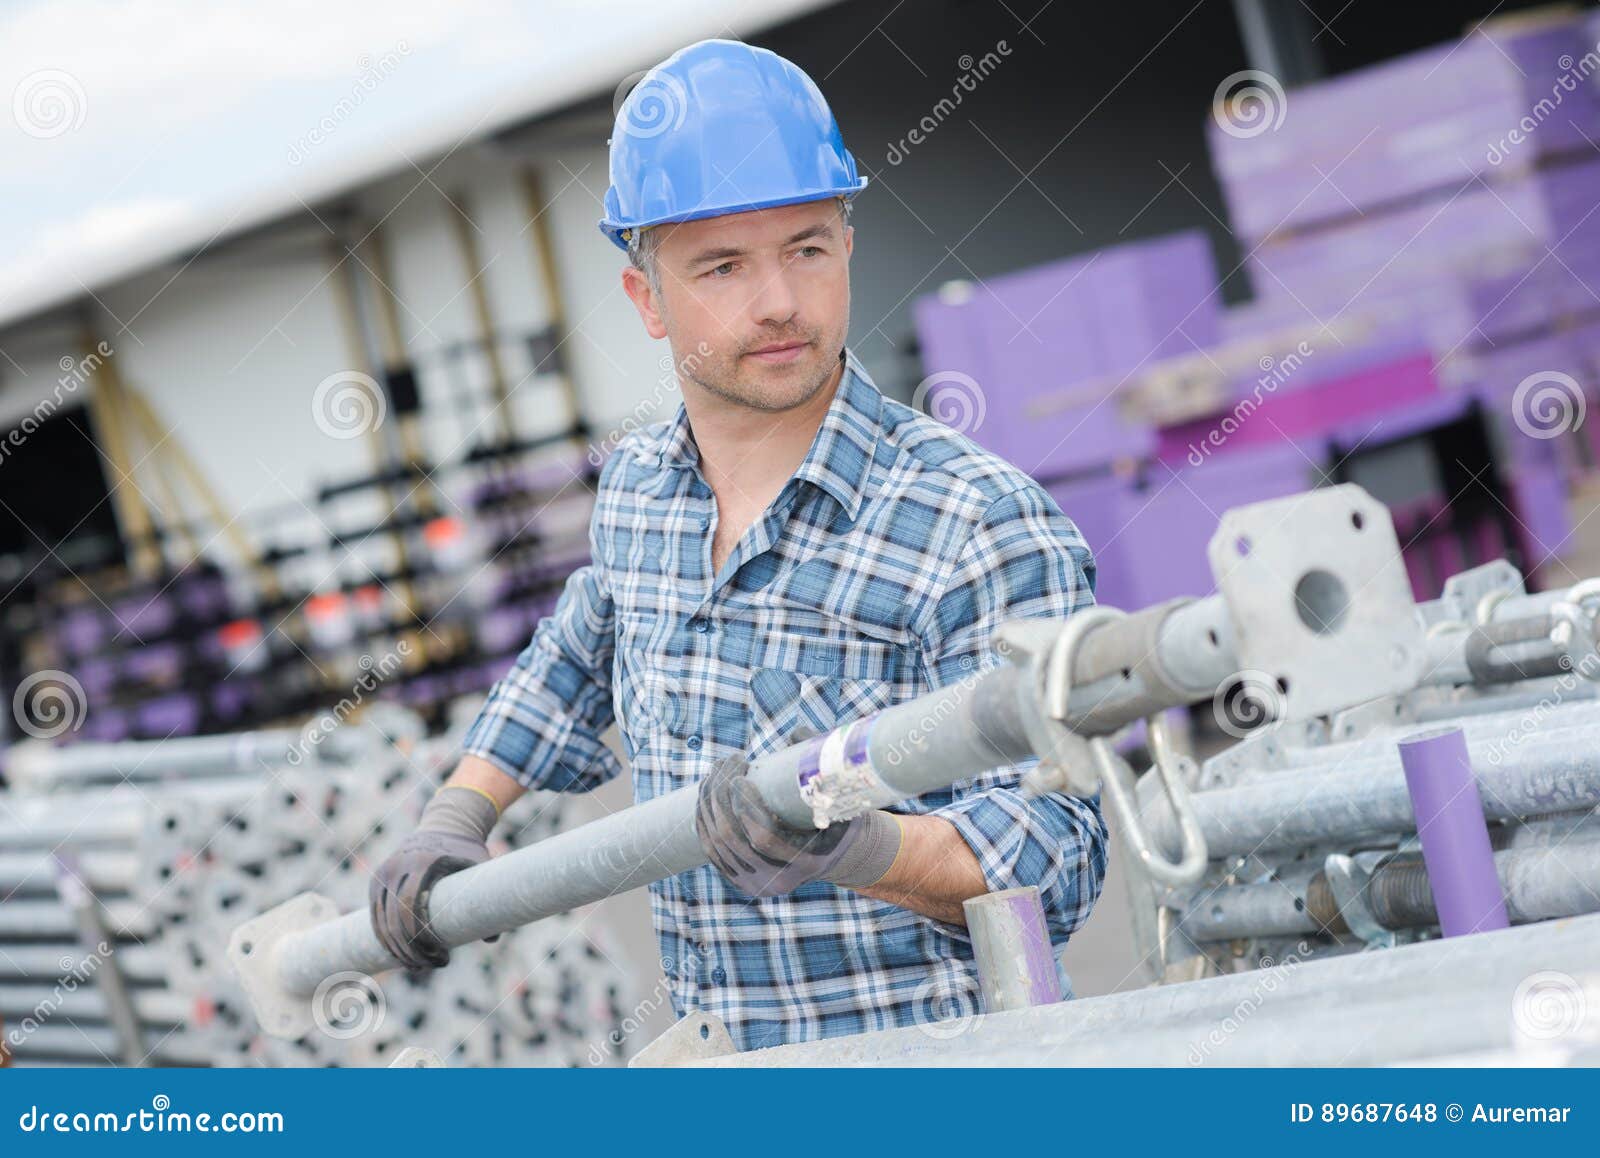 man moving scaffold pole